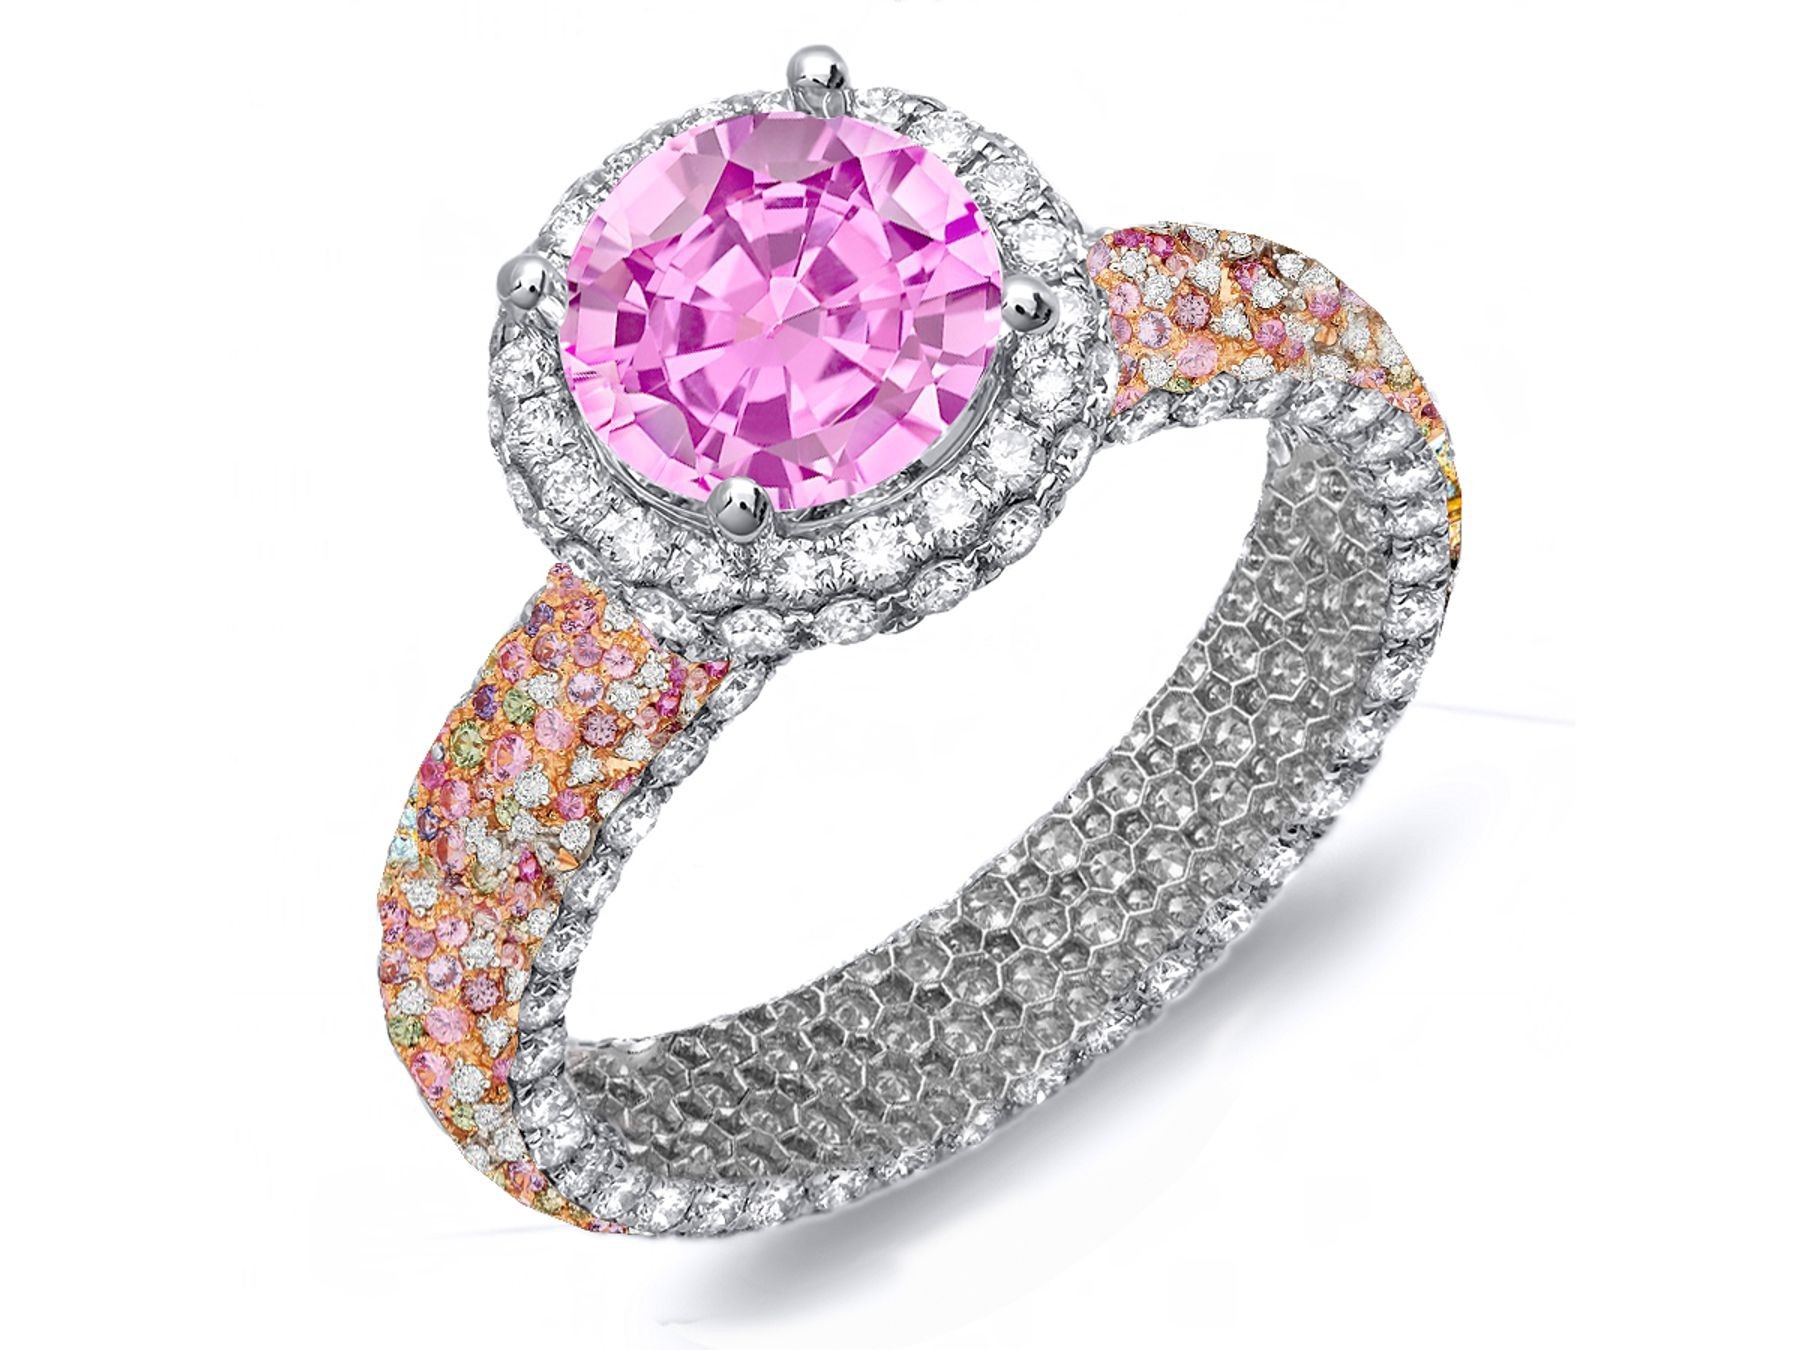 Explore Micro Pave Cluster Diamond & Multi-Colored Precious Stones Rubies, Emeralds & Blue, Pink, Purple, Yellow Sapphires